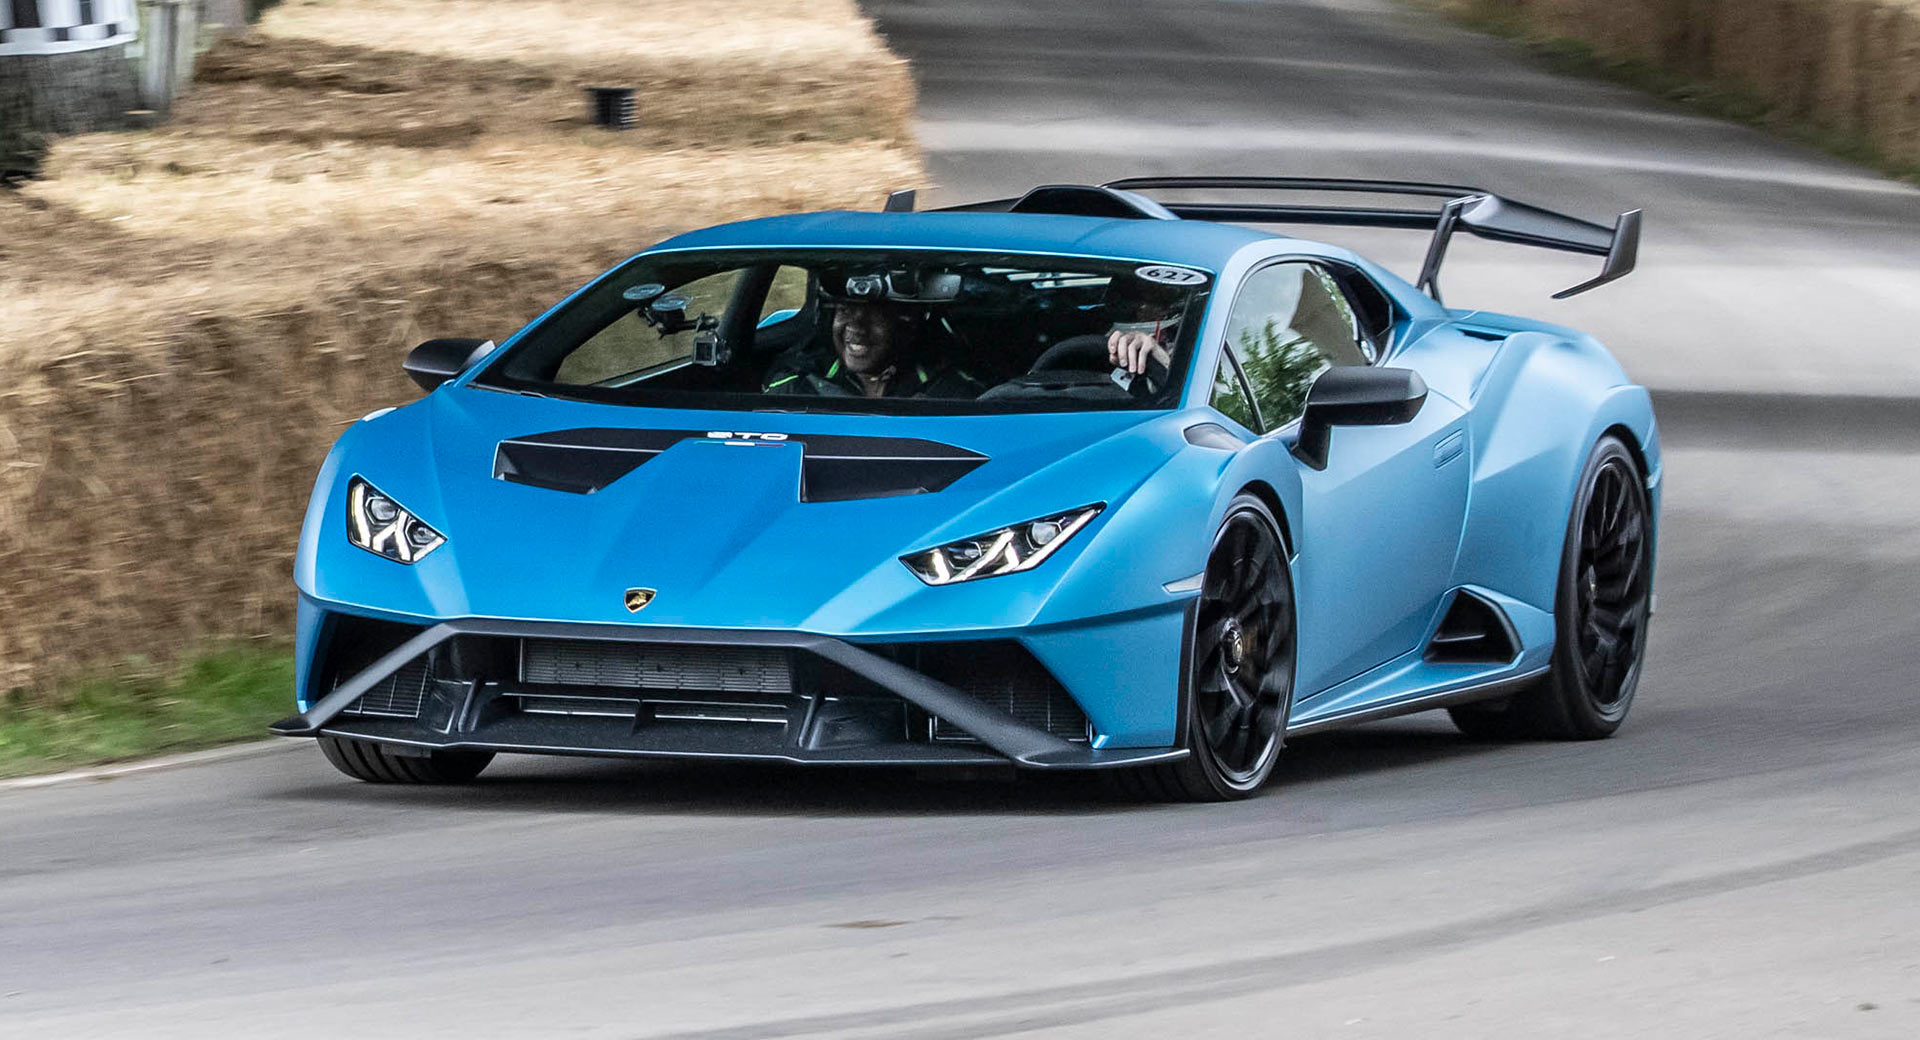 Lamborghini To Reveal LMDh Race Car At Goodwood, Revuelto To Run Hill Climb